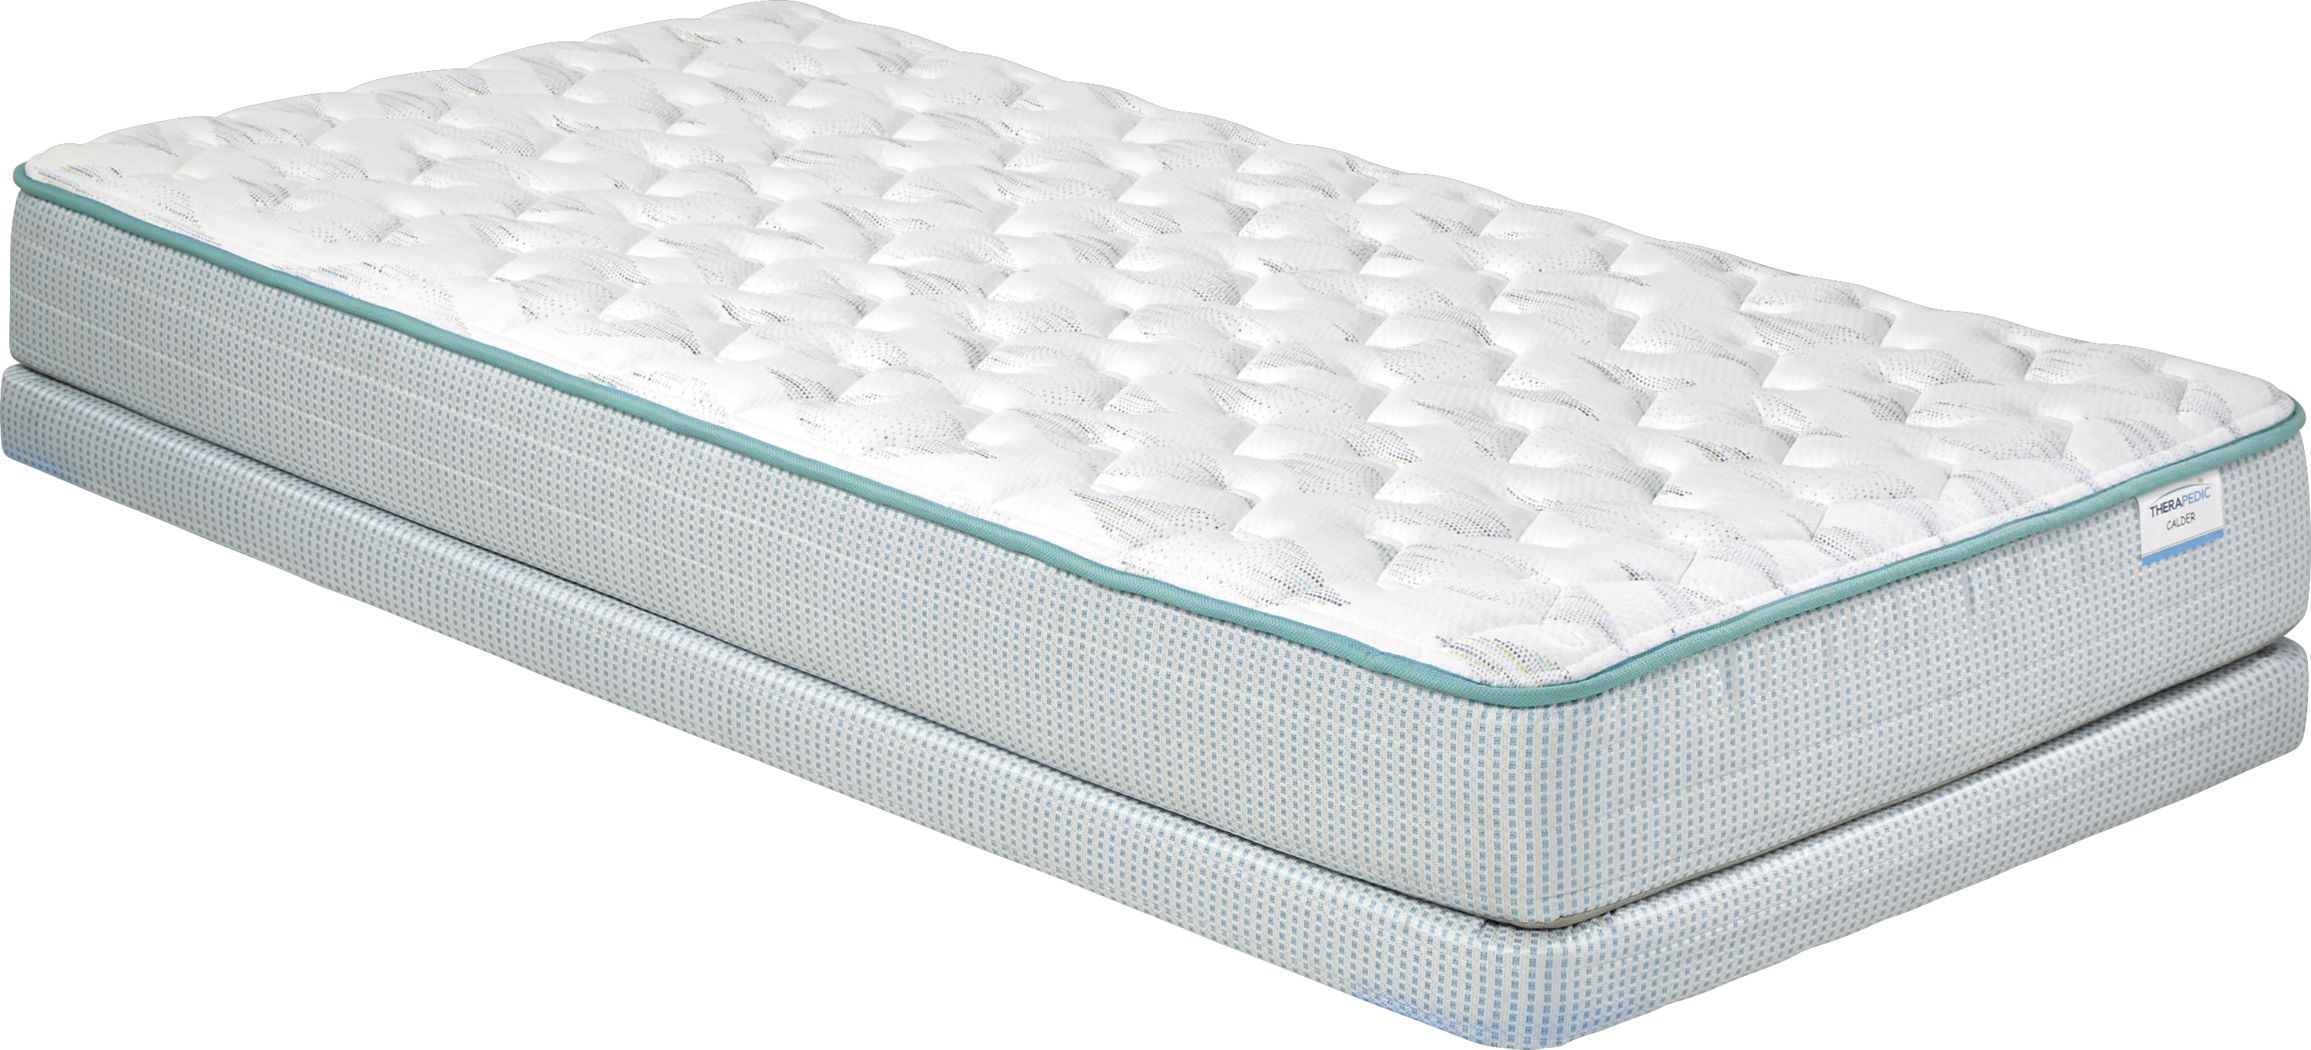 therapedic calder twin mattress